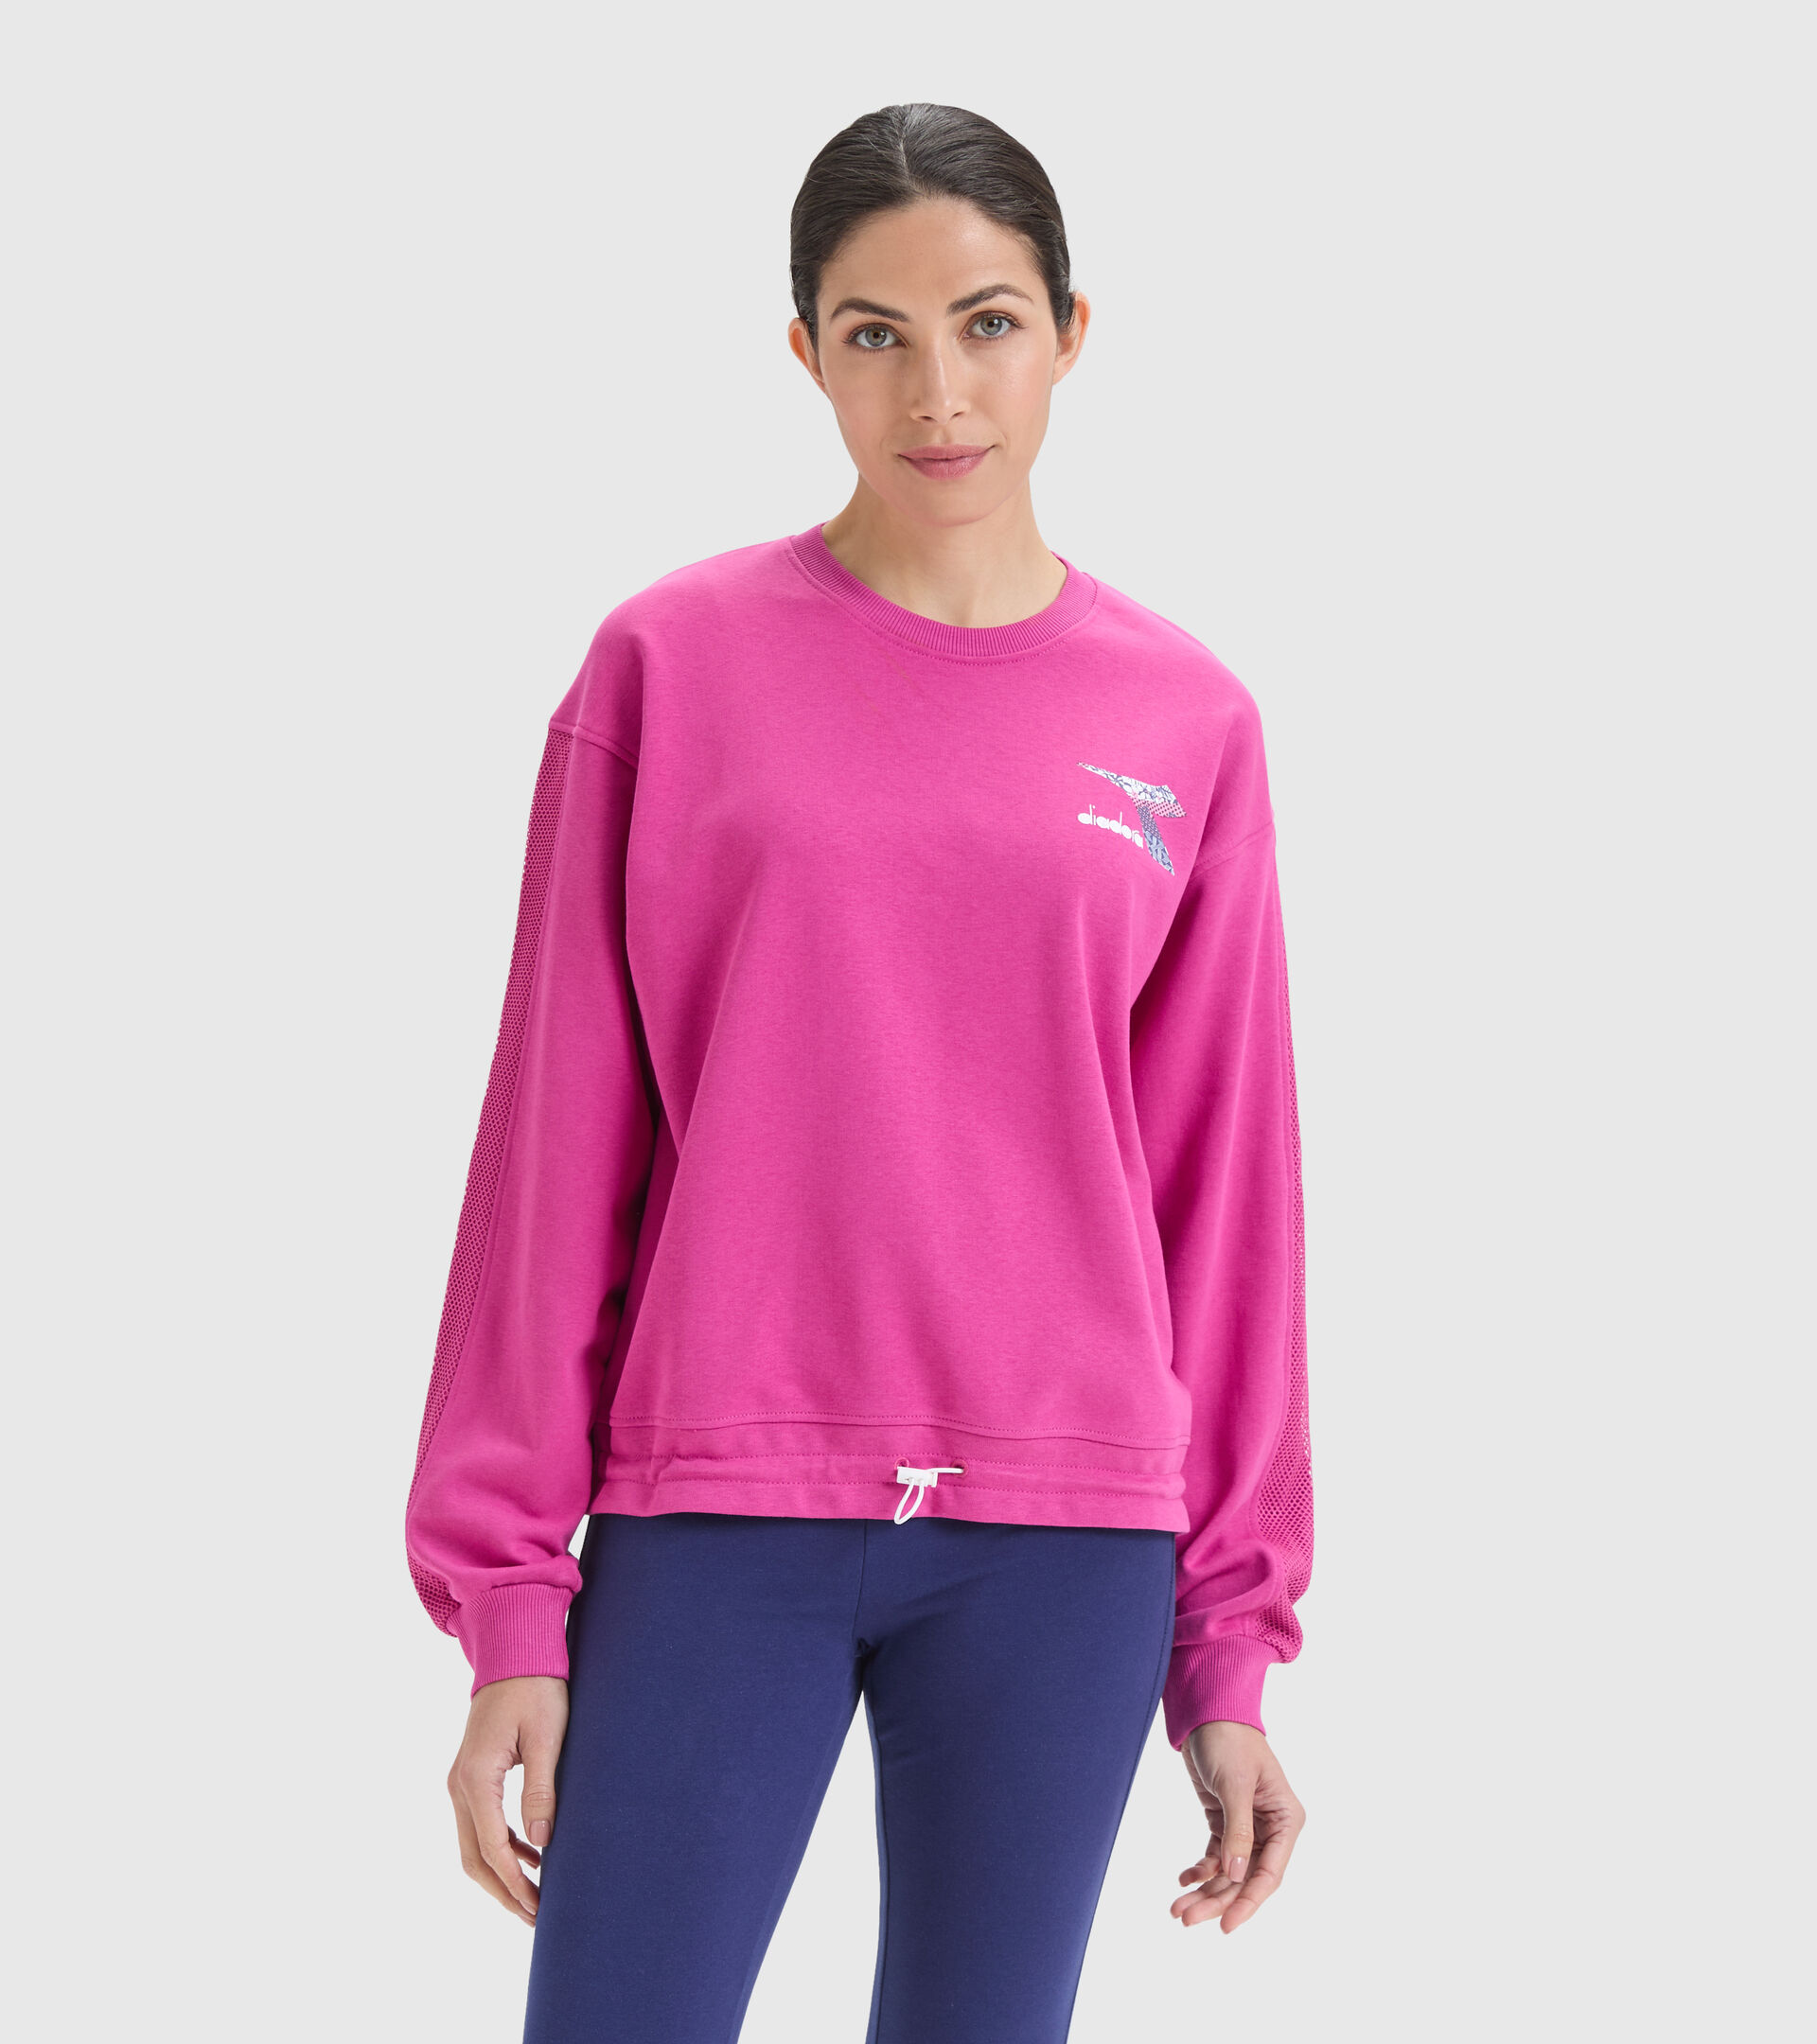 Sportliches Baumwoll-Sweatshirt - Damen L.SWEAT FLOSS ROSA IBIS - Diadora